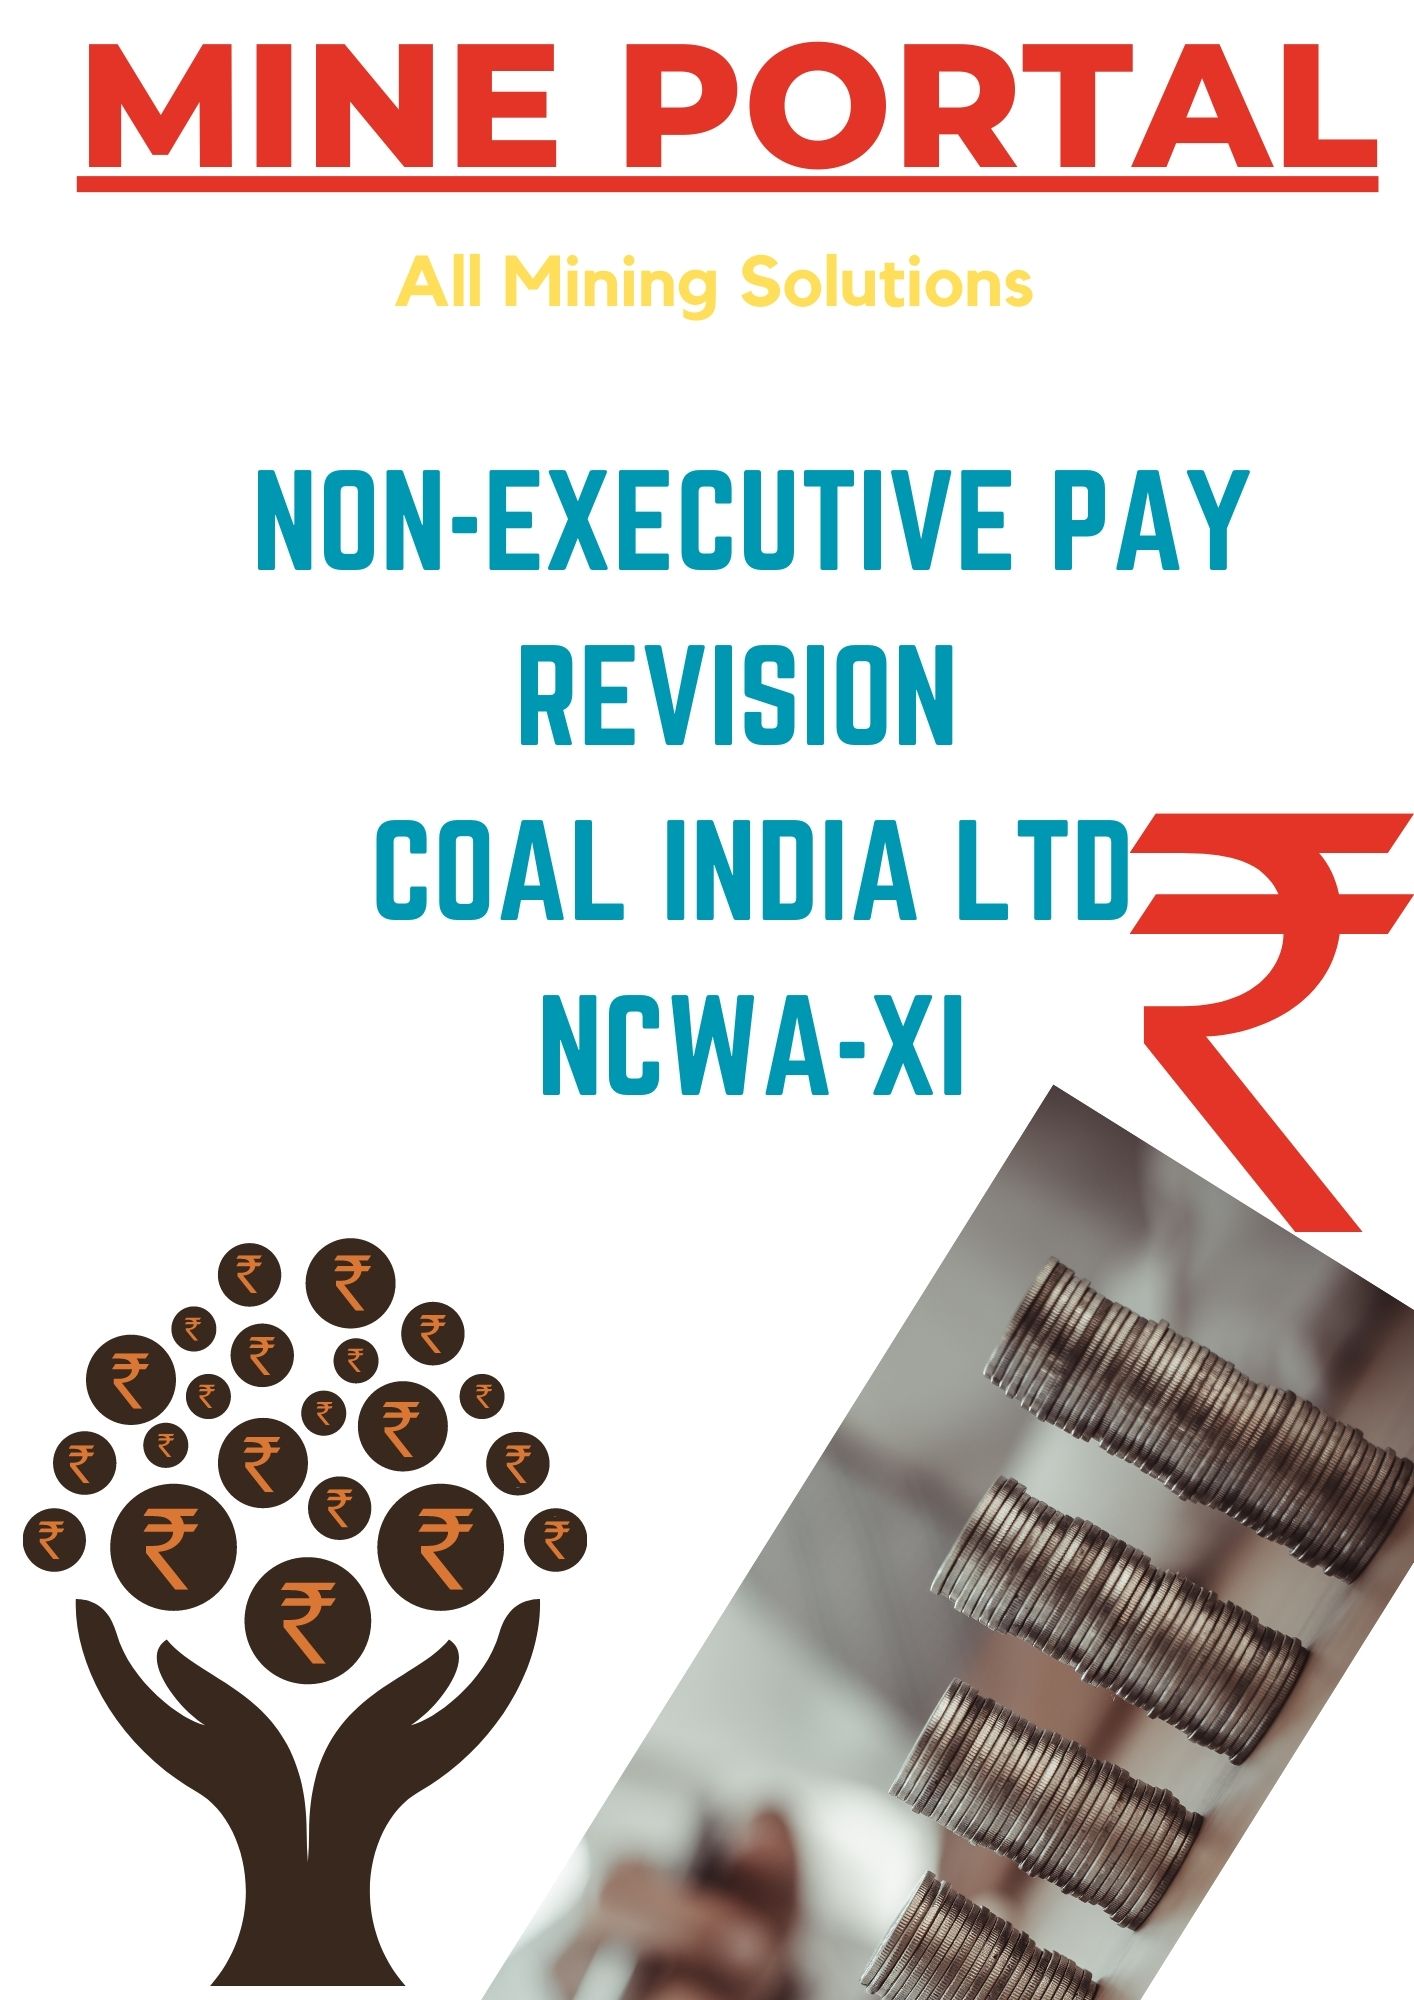 NCWA - XI COAL INDIA LTD